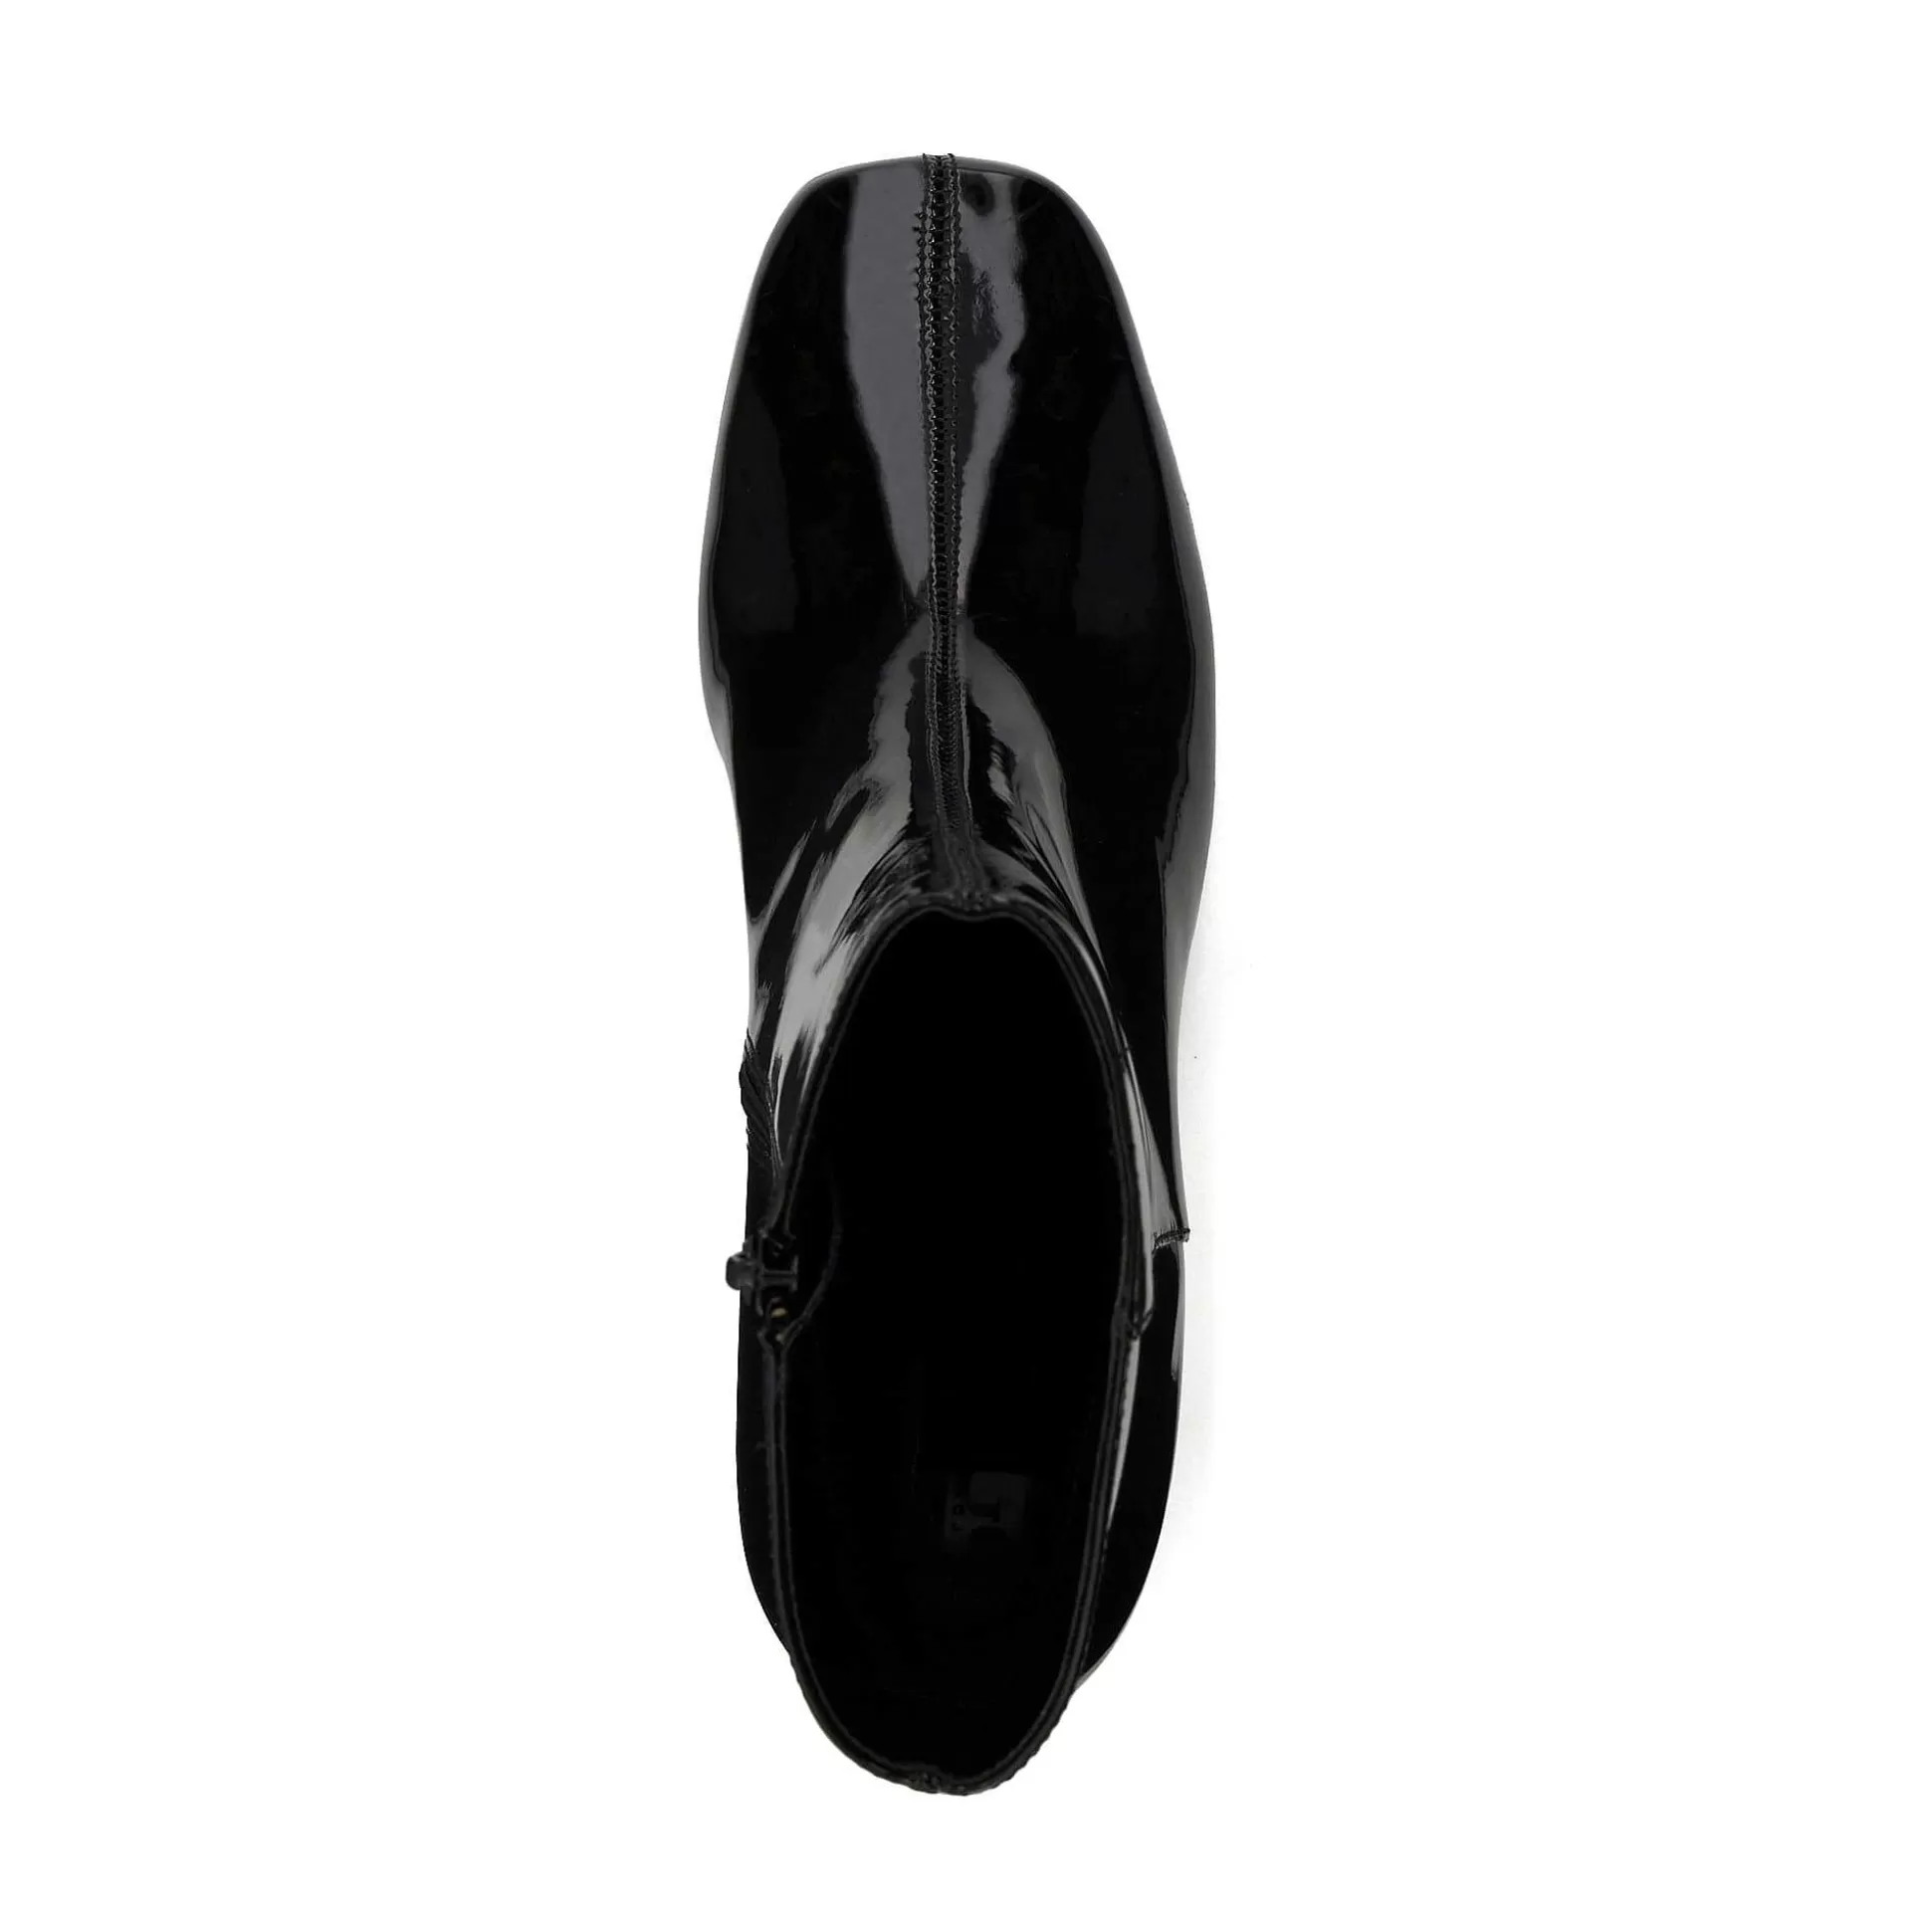 Dune London ONSEN - BLACK-Women Ankle Boots